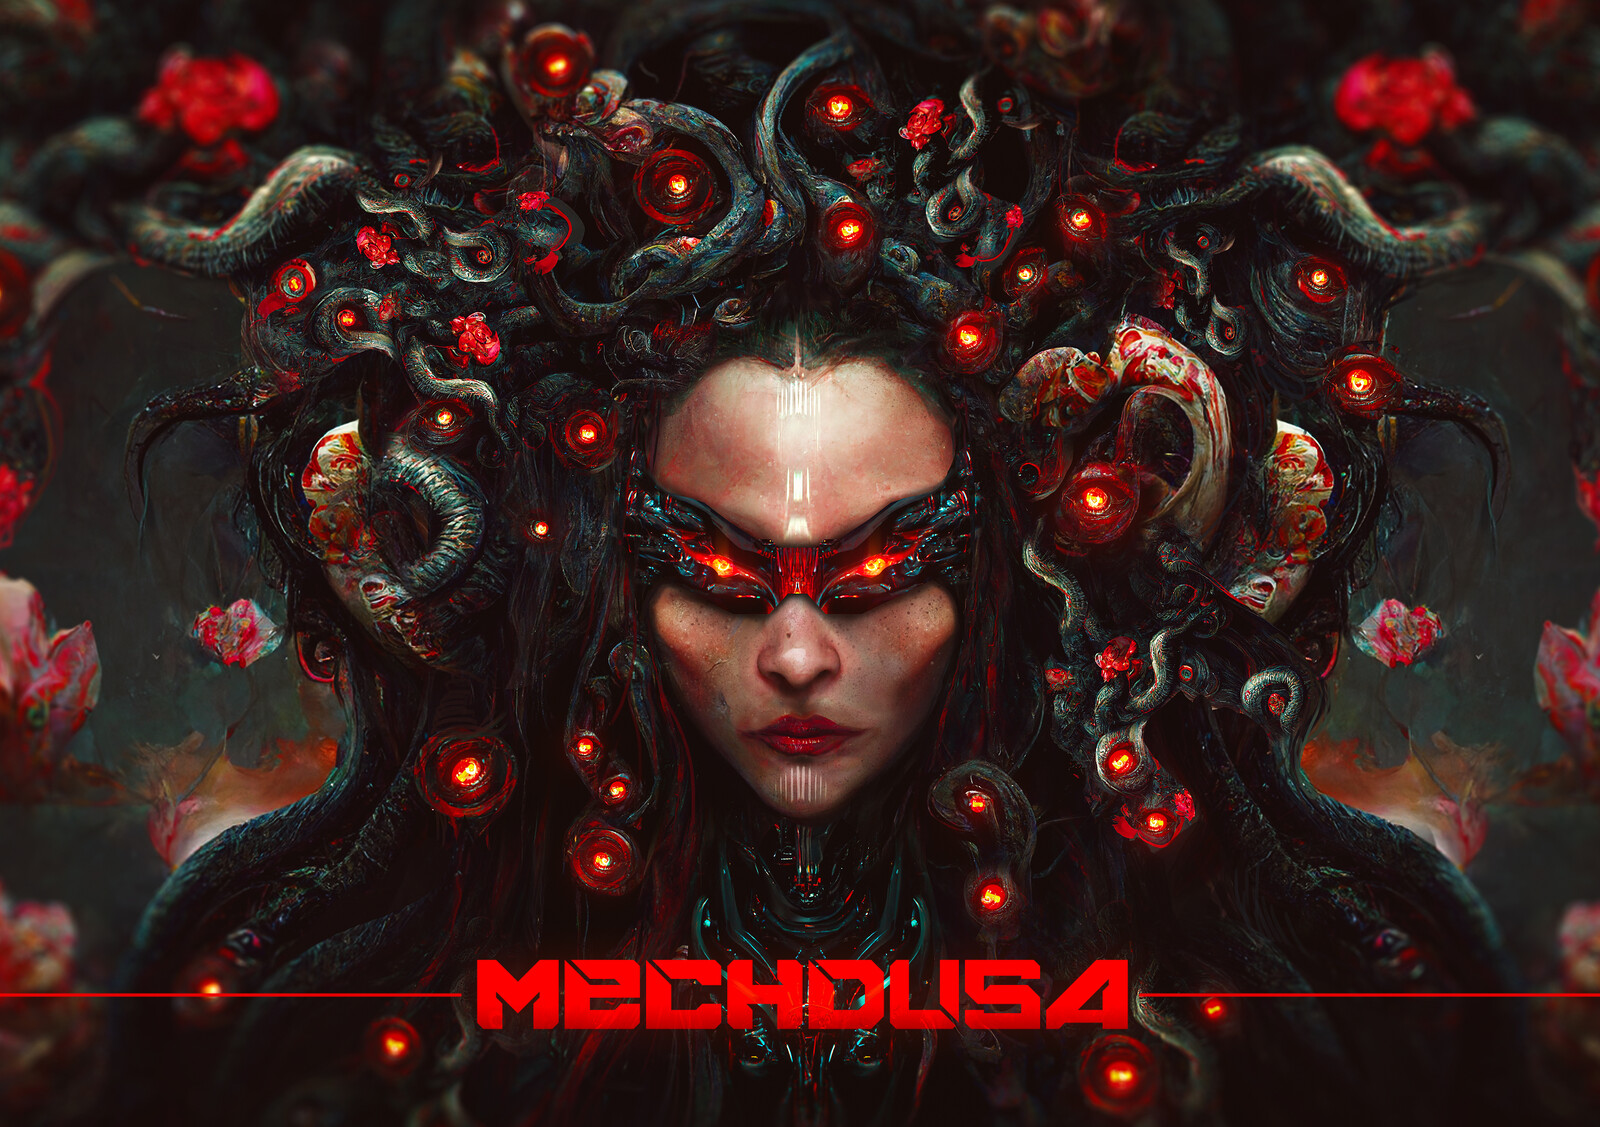 MECHDUSA - A.I Art + Photoshop Process